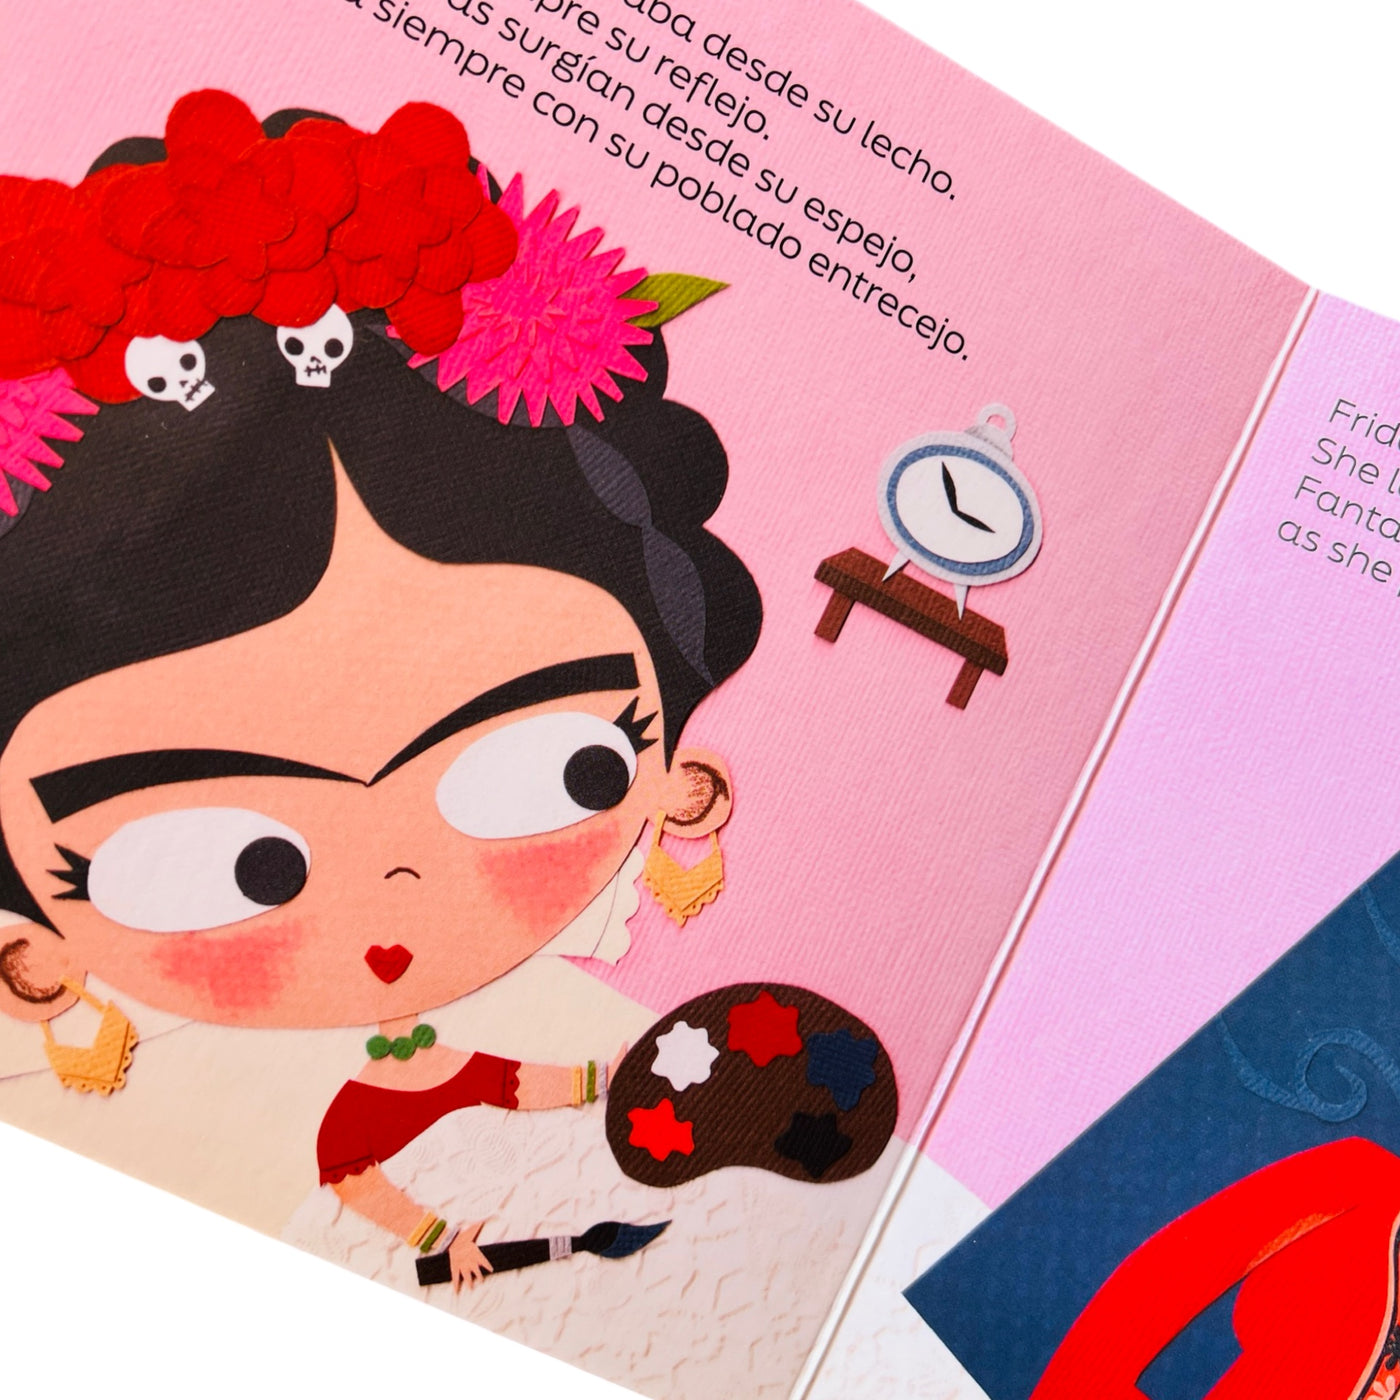 Medias Naranjas: Diego & Frida - A Bilingual Book